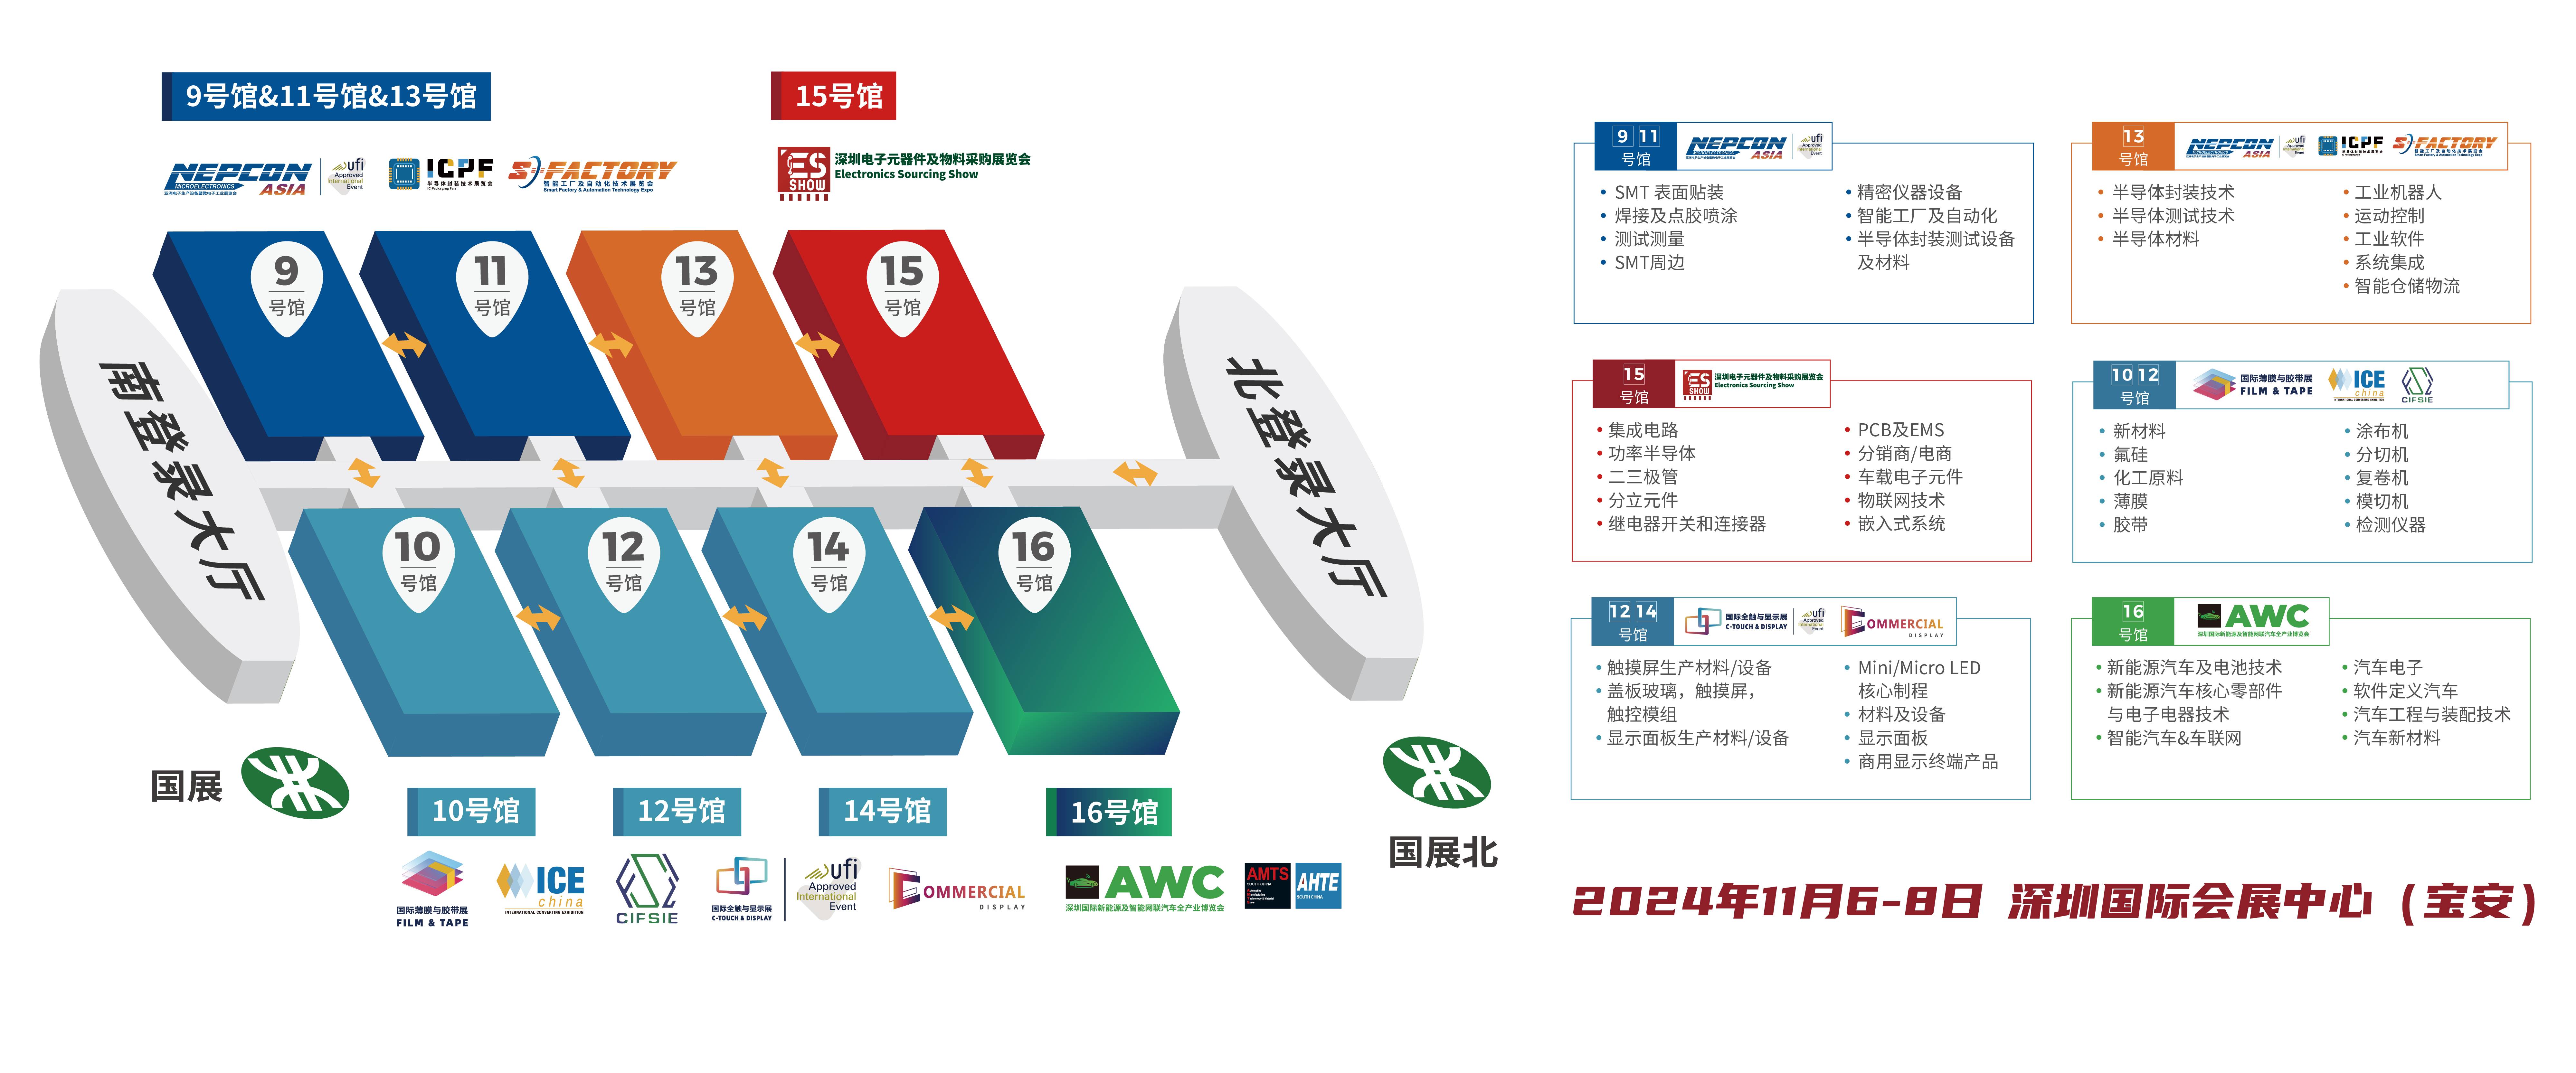 ESSHOW 华南电子展 充电桩 移动能源 新能源汽车